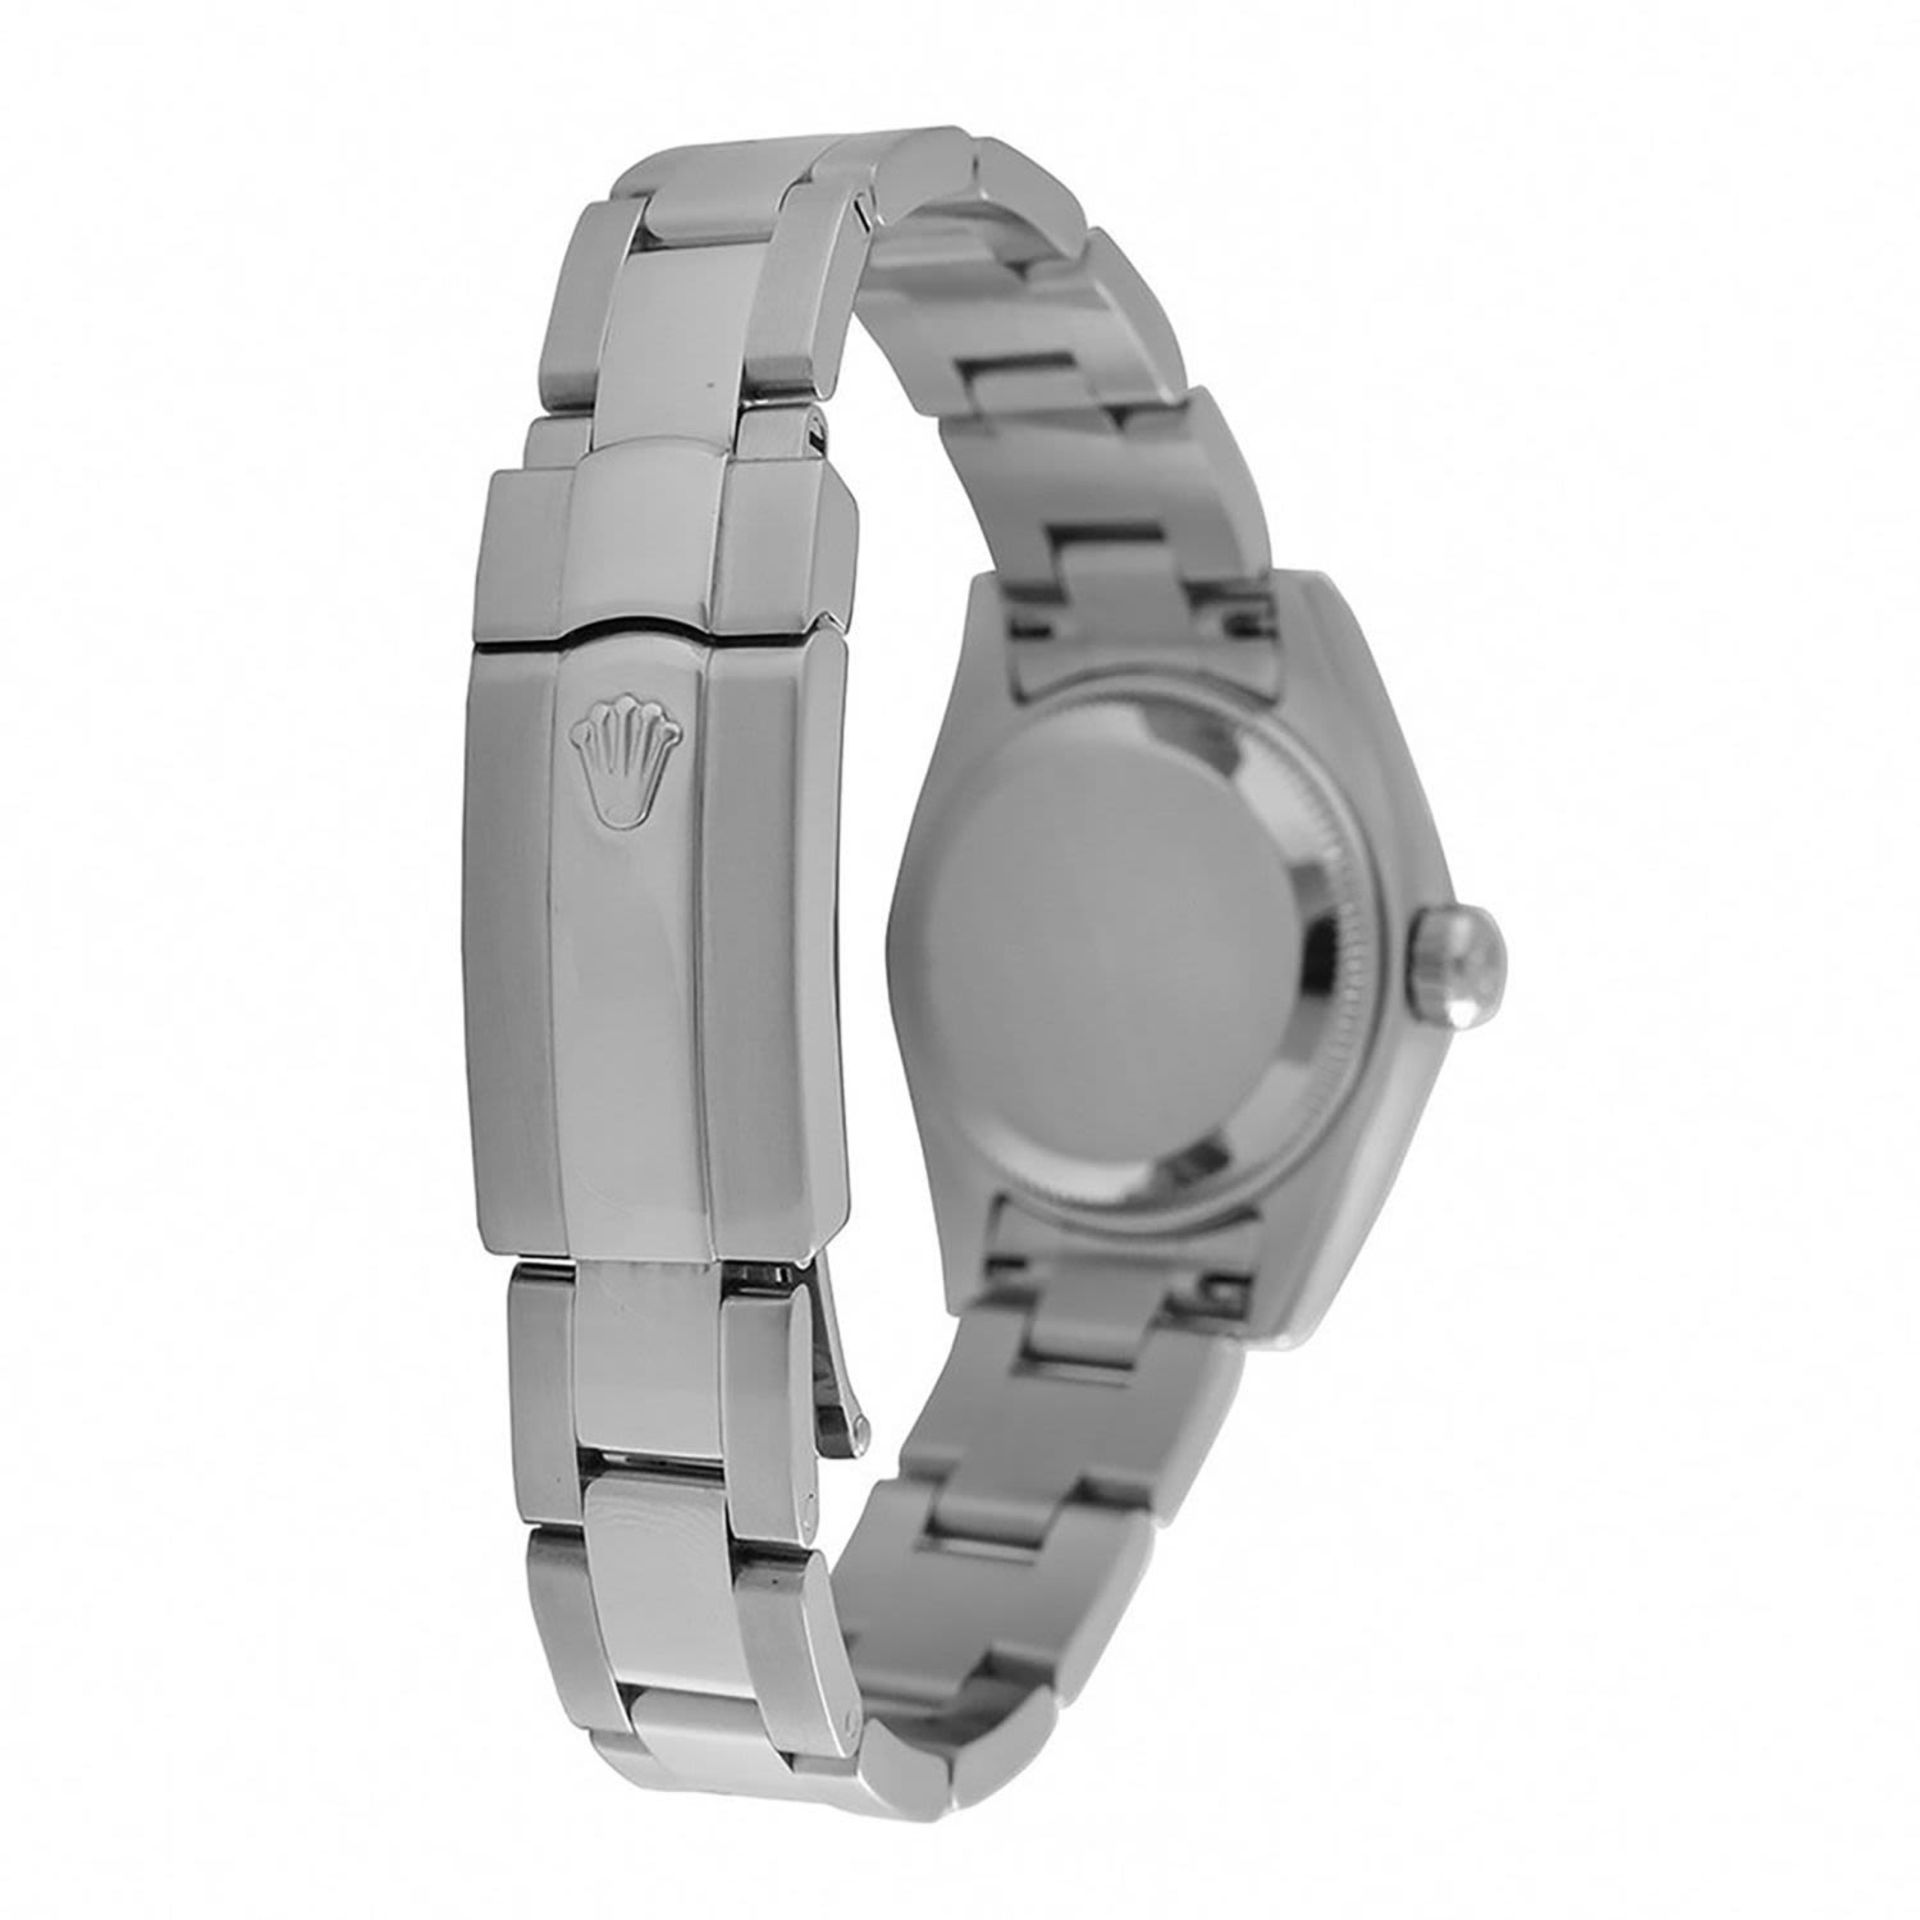 Rolex Lady Datejust wristwatch, year 2006 - Image 3 of 6